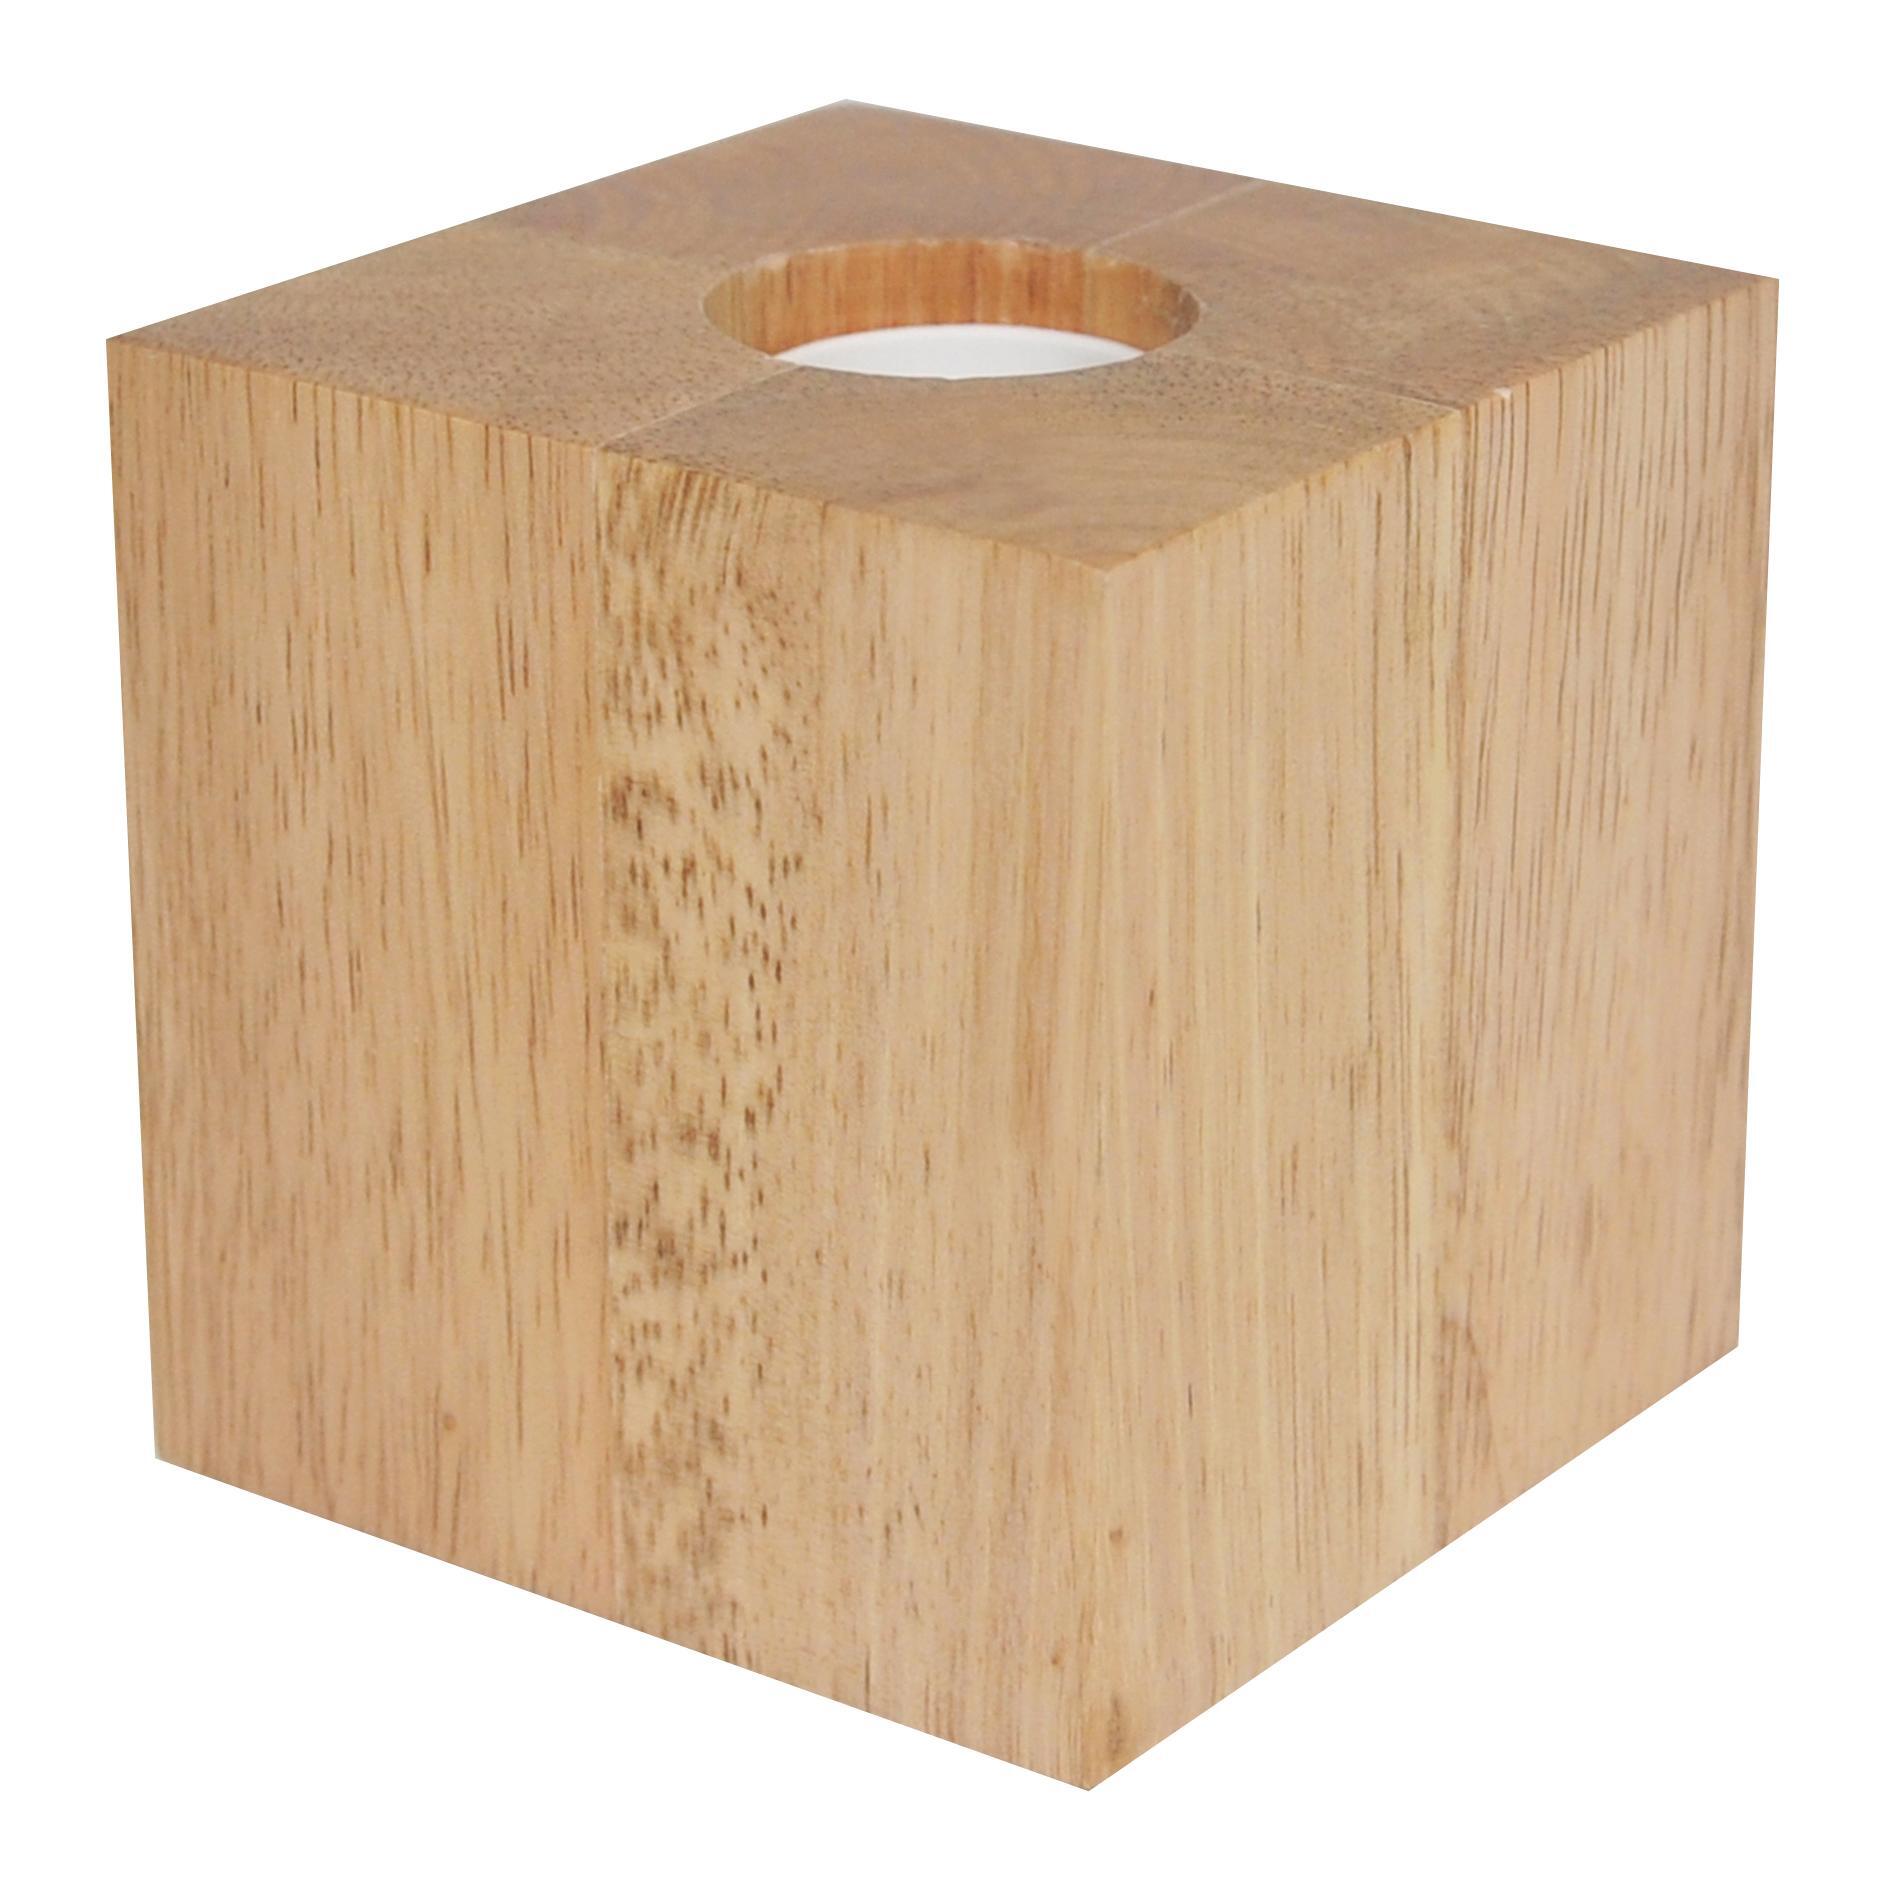 Applique scandinavo Blok marrone, in legno, 10 x 10 cm, INSPIRE - 9